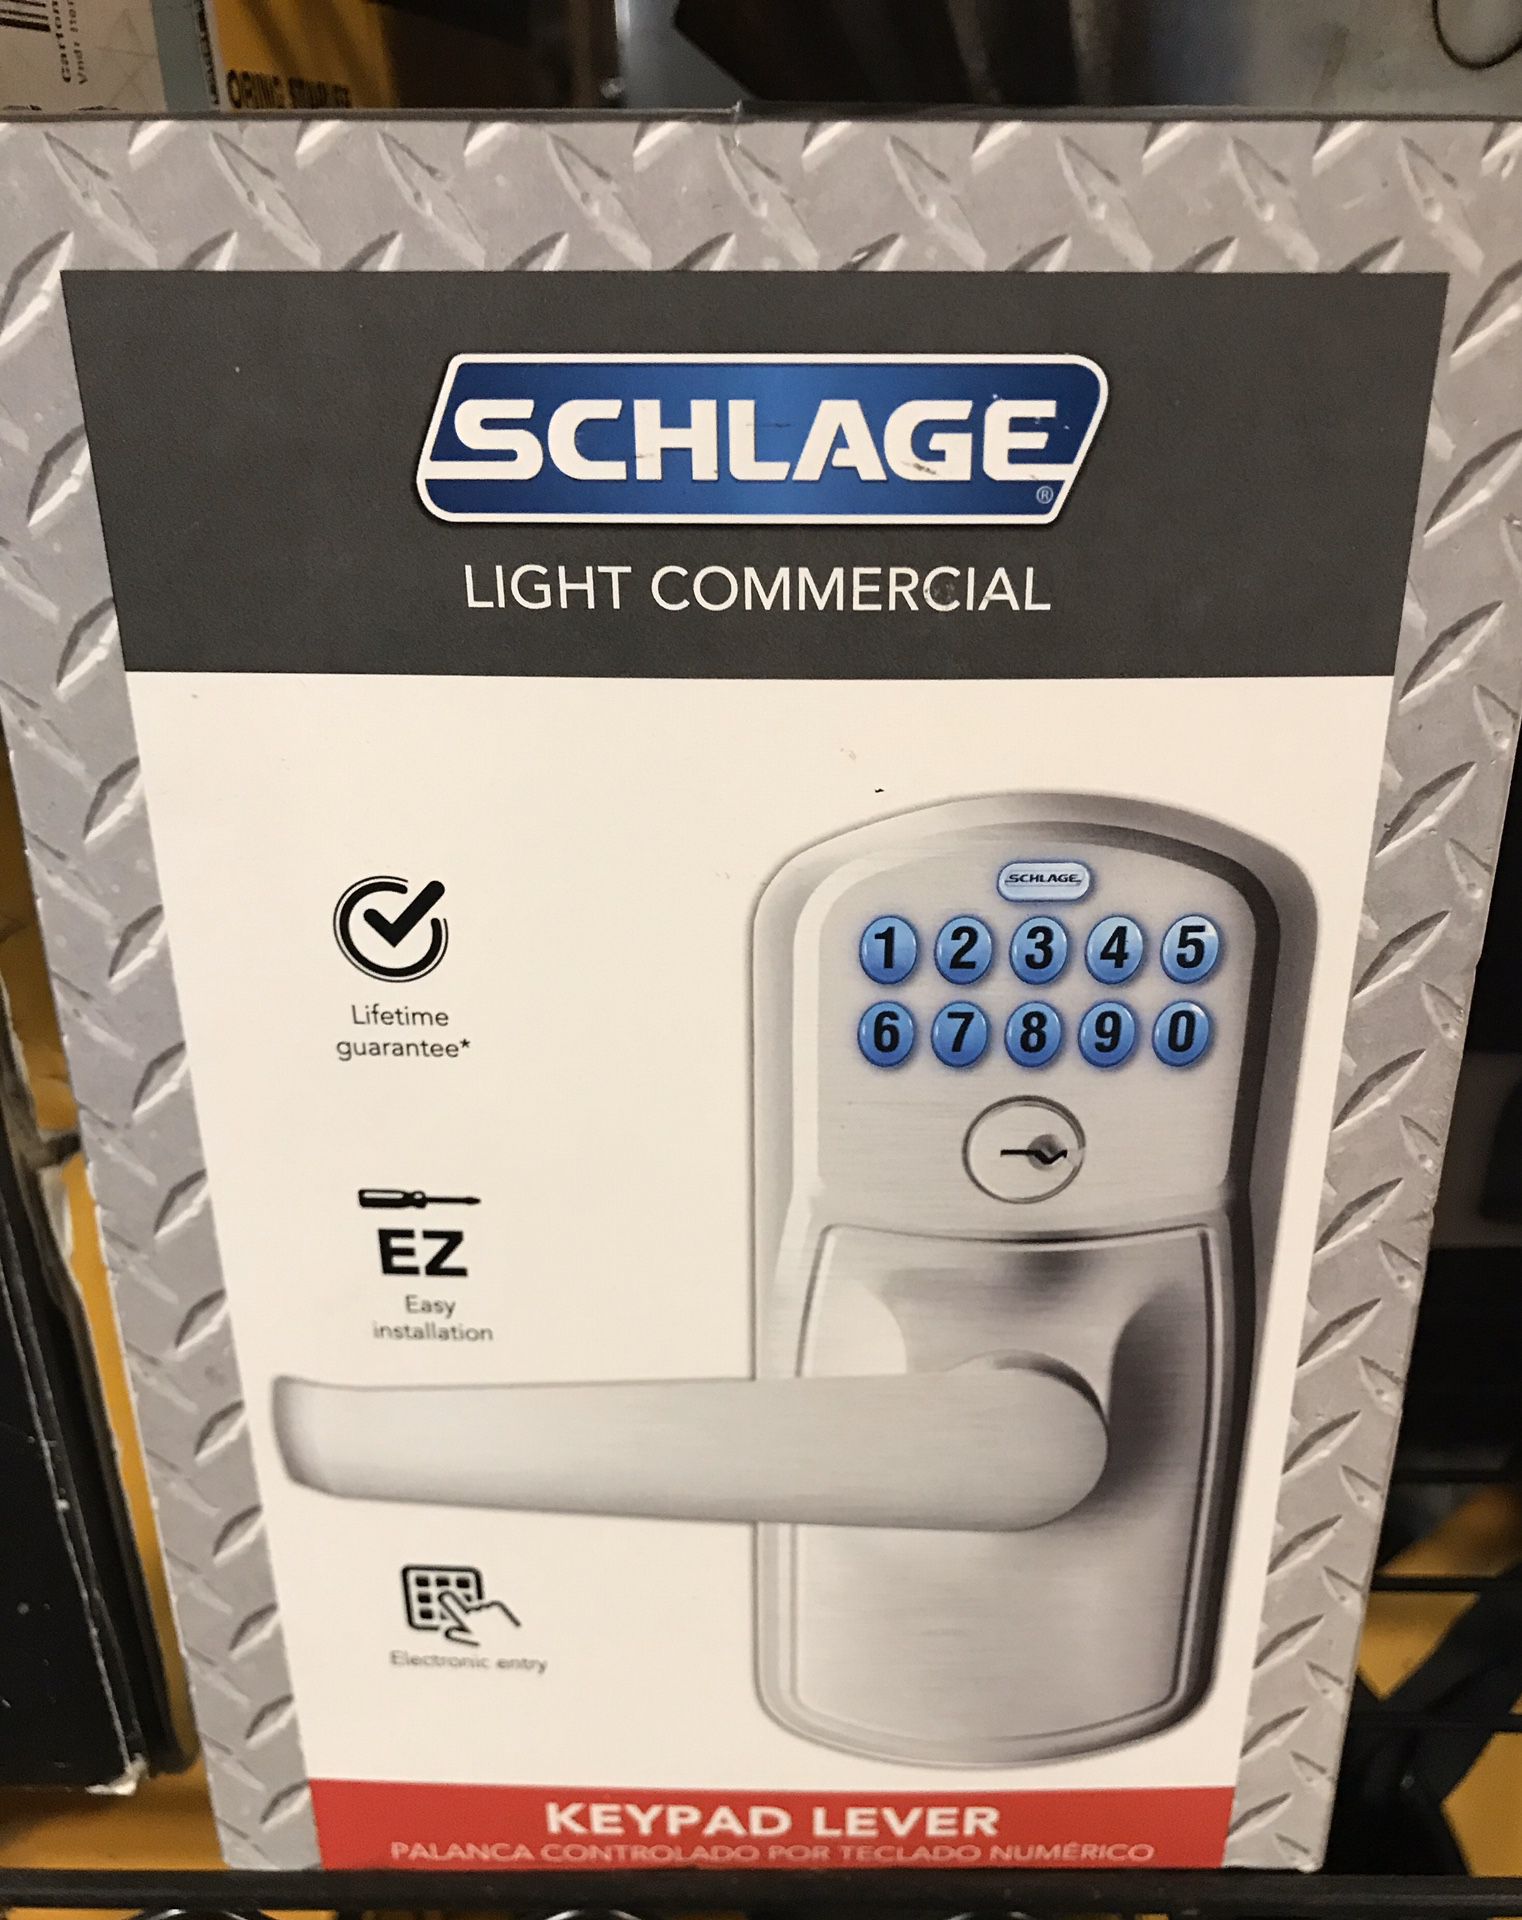 Schlage light commercial keypad lever door lock